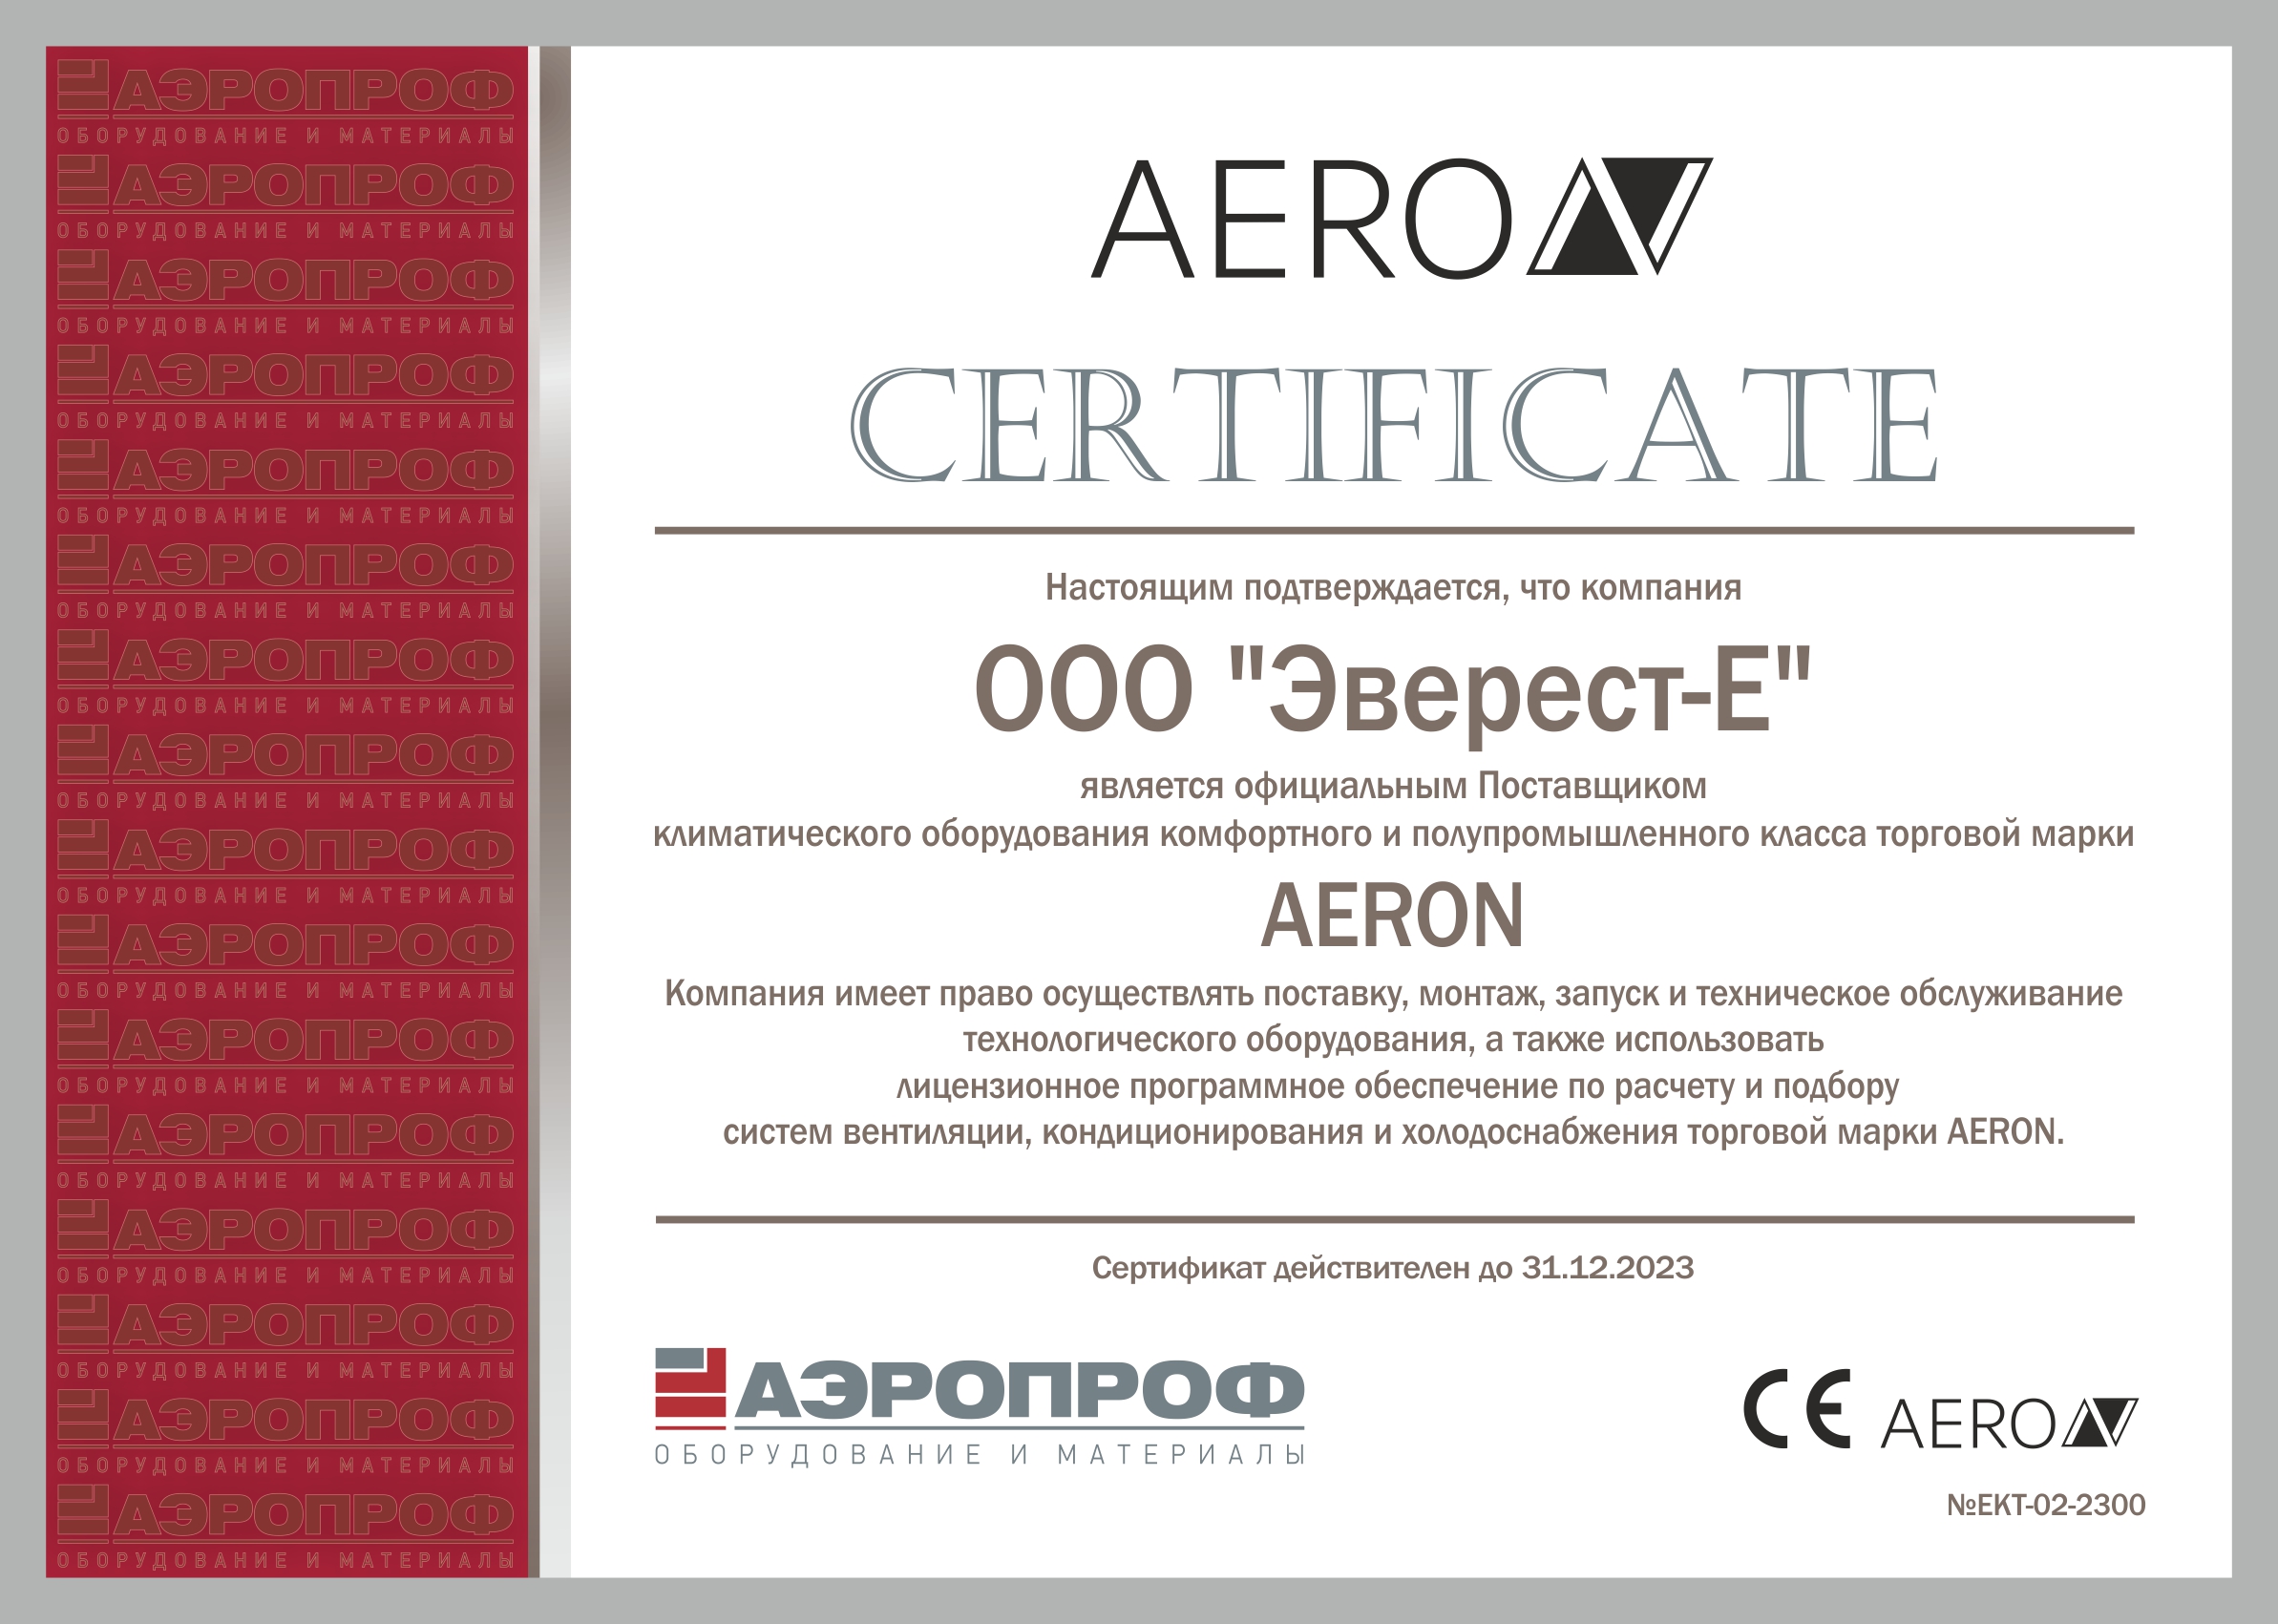 sert23-everest-aeron Kondicioner Aero ALRS-II-24IHA4-01/ALRS-II-24OHA4-01 kypit v Ekaterinbyrge v internet-magazine KlimatMarket96.ry Сертификат официального дилера